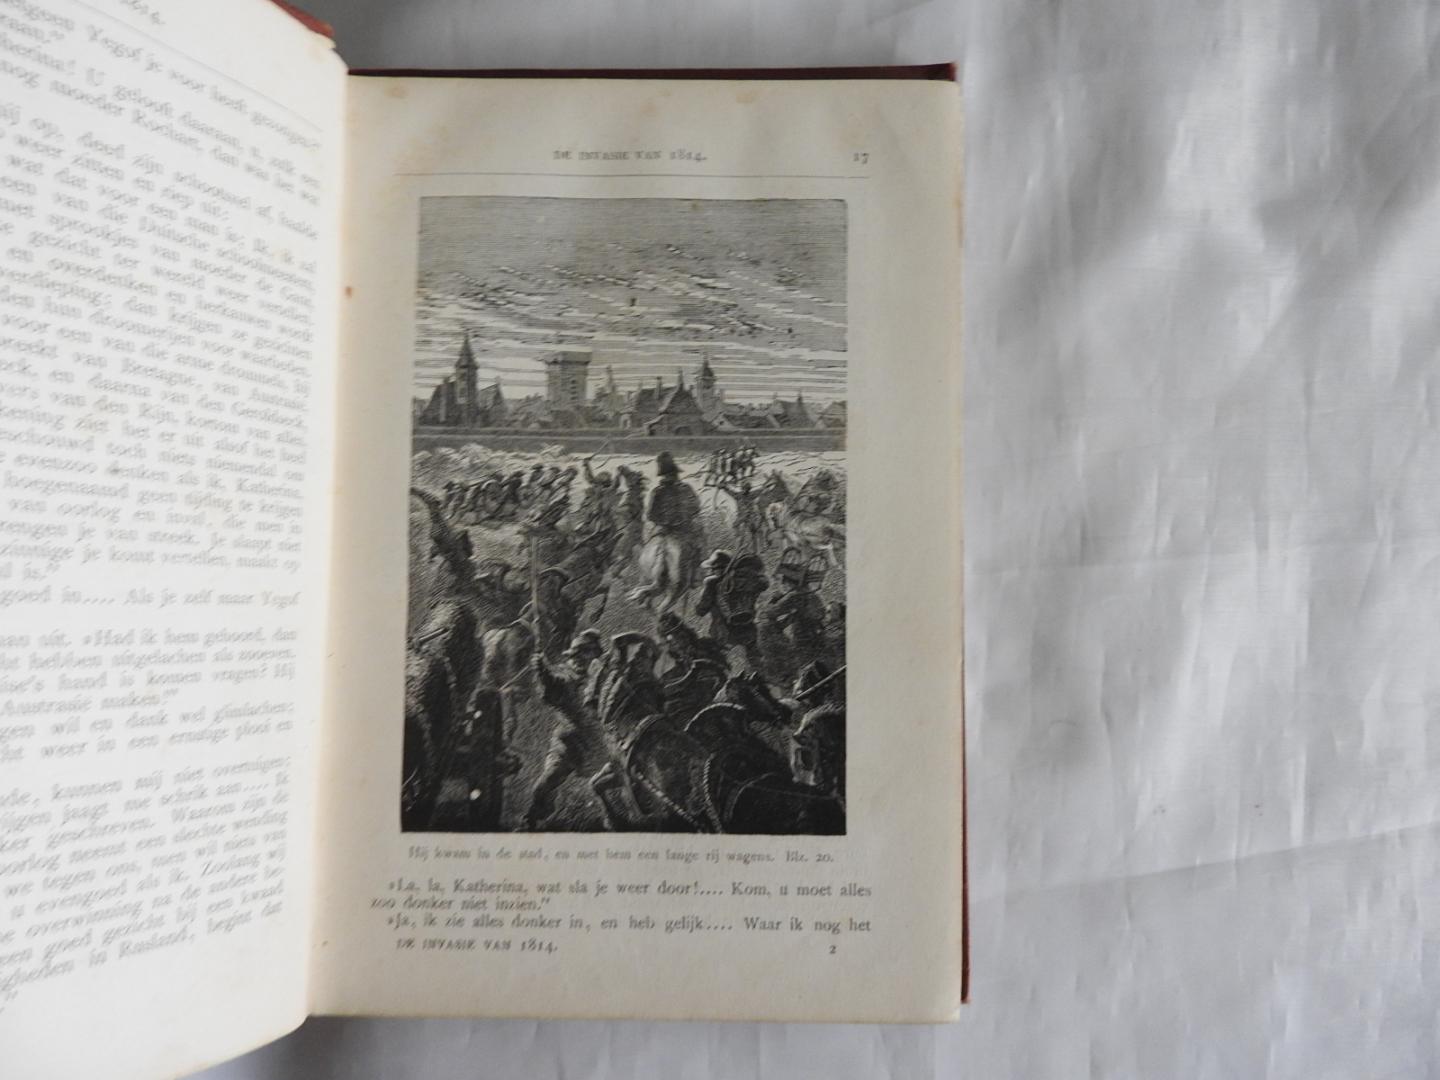 Erckmann-Chatrian - Illustr Th. Schuler / Fuchs - De blokkade van Phalsburg - Invasie van 1814